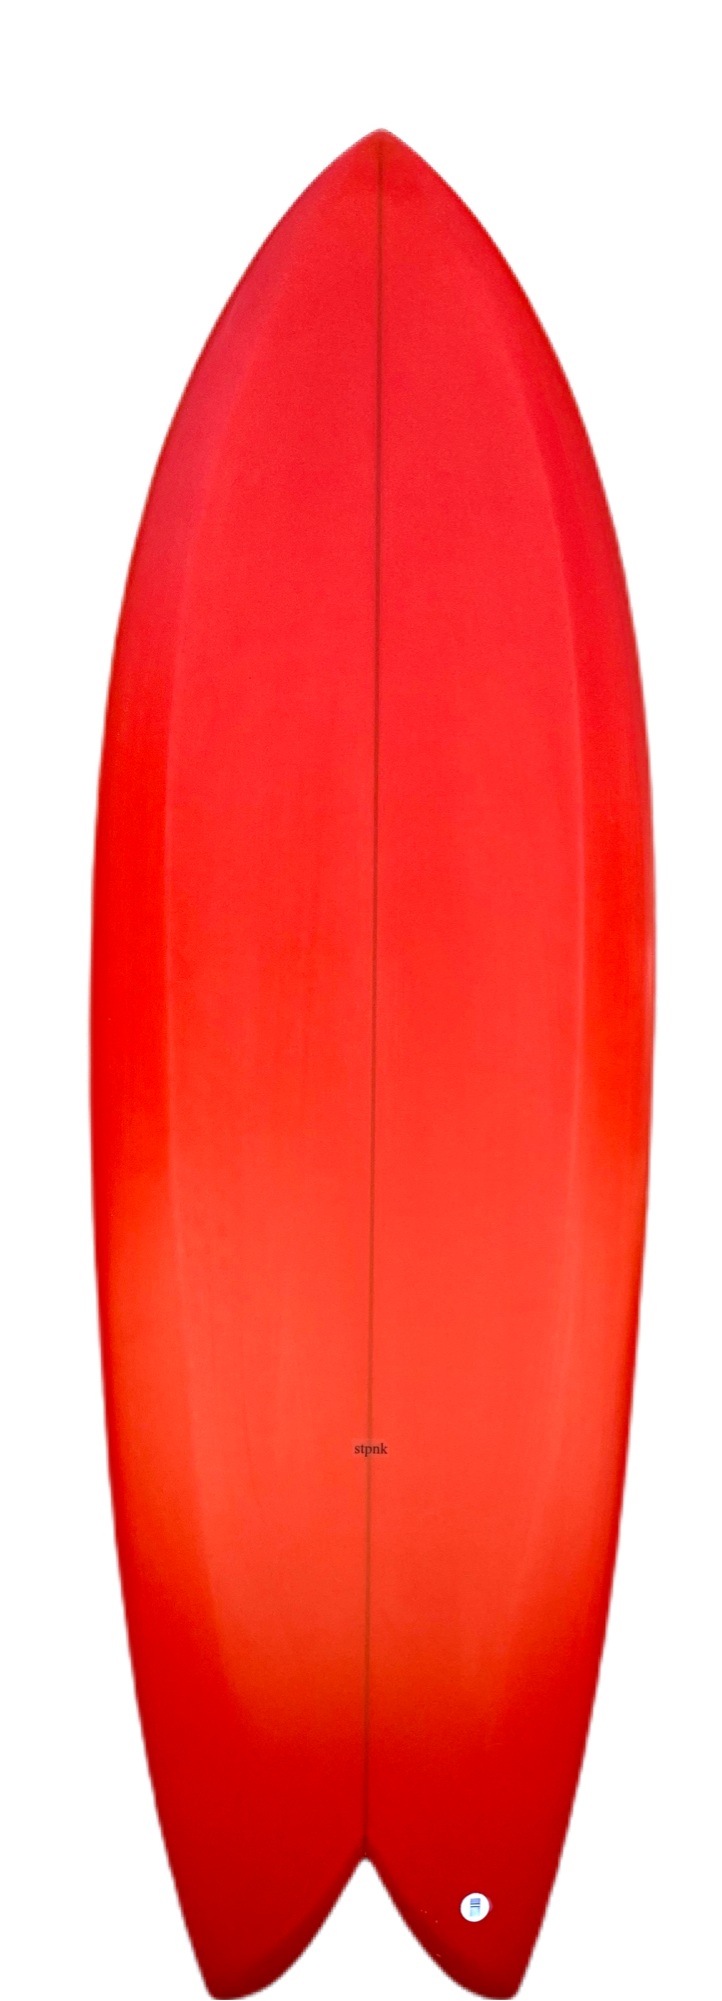 STPNK Fish 5'6 Vintage Red - SurfBored